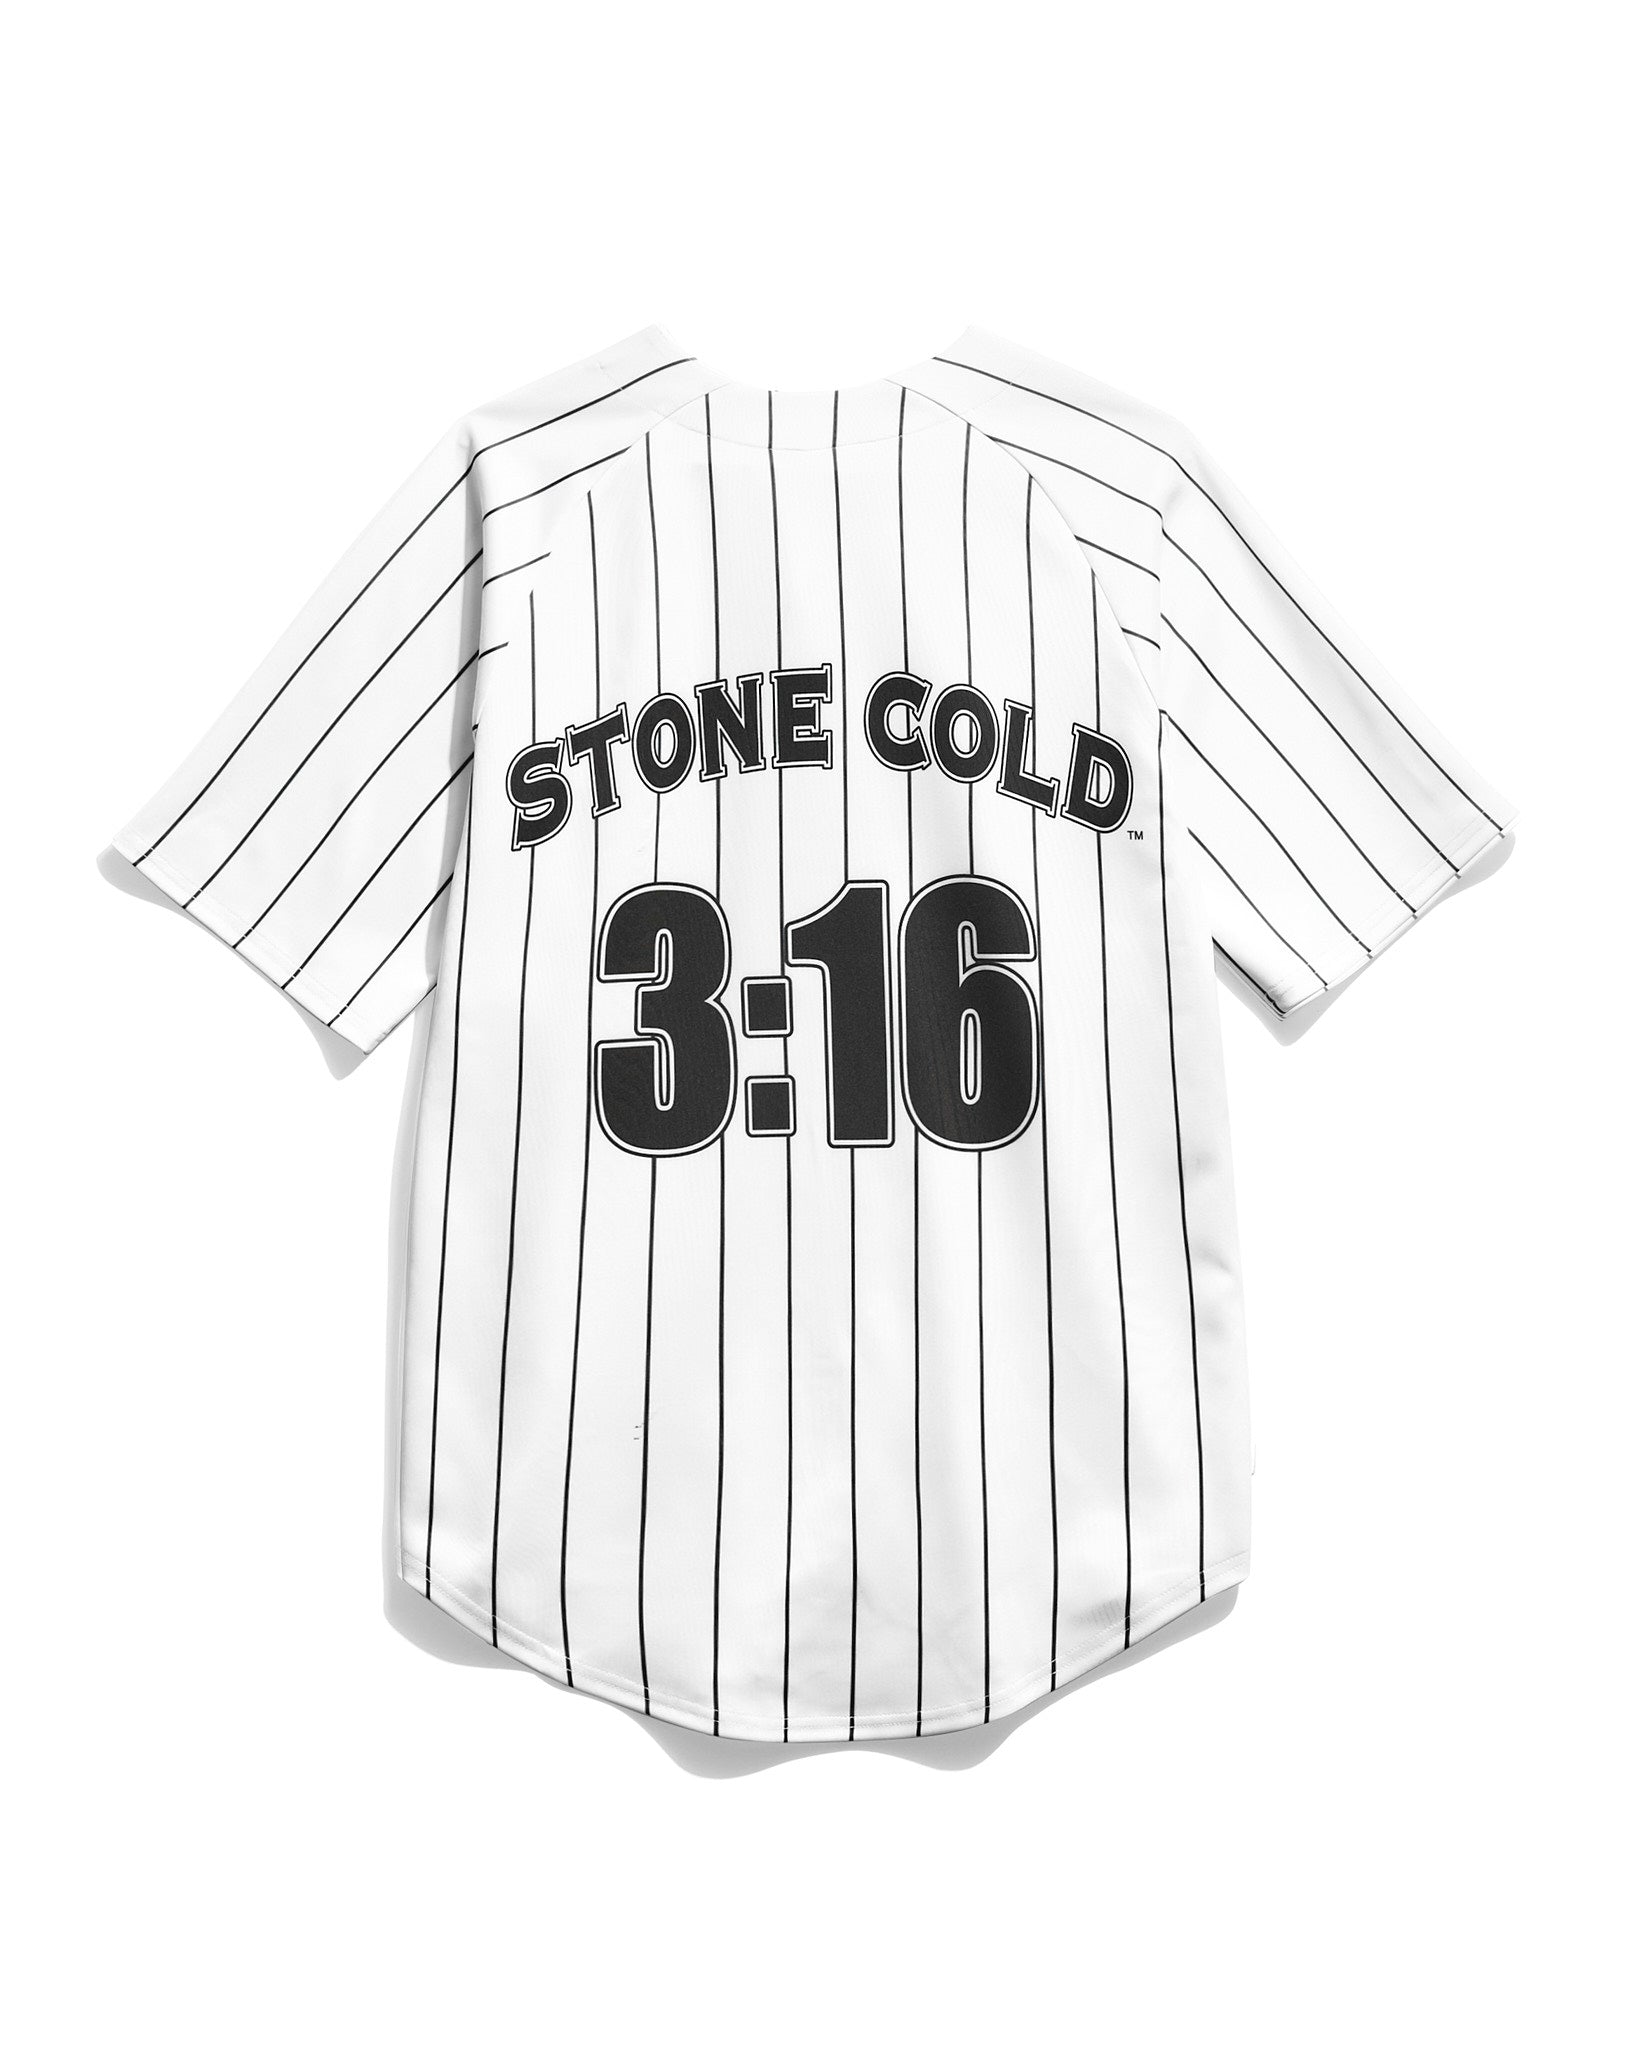 Stone Cold Steve Austin 3:16 White Baseball Jersey